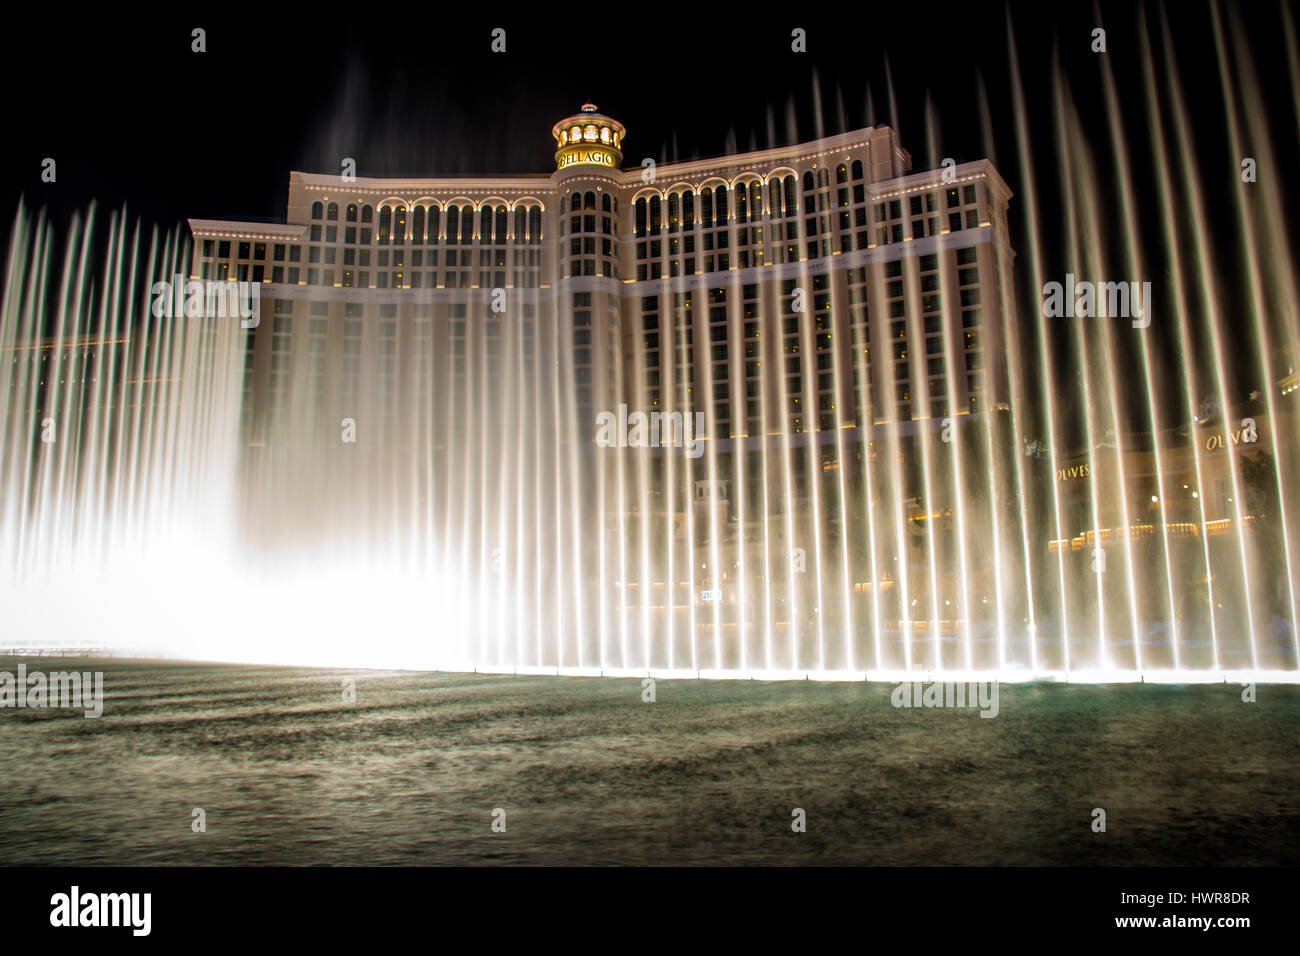 Dancing Fountains at Bellagio Hotel Casino at night - Las Vegas, Nevada, USA Stock Photo